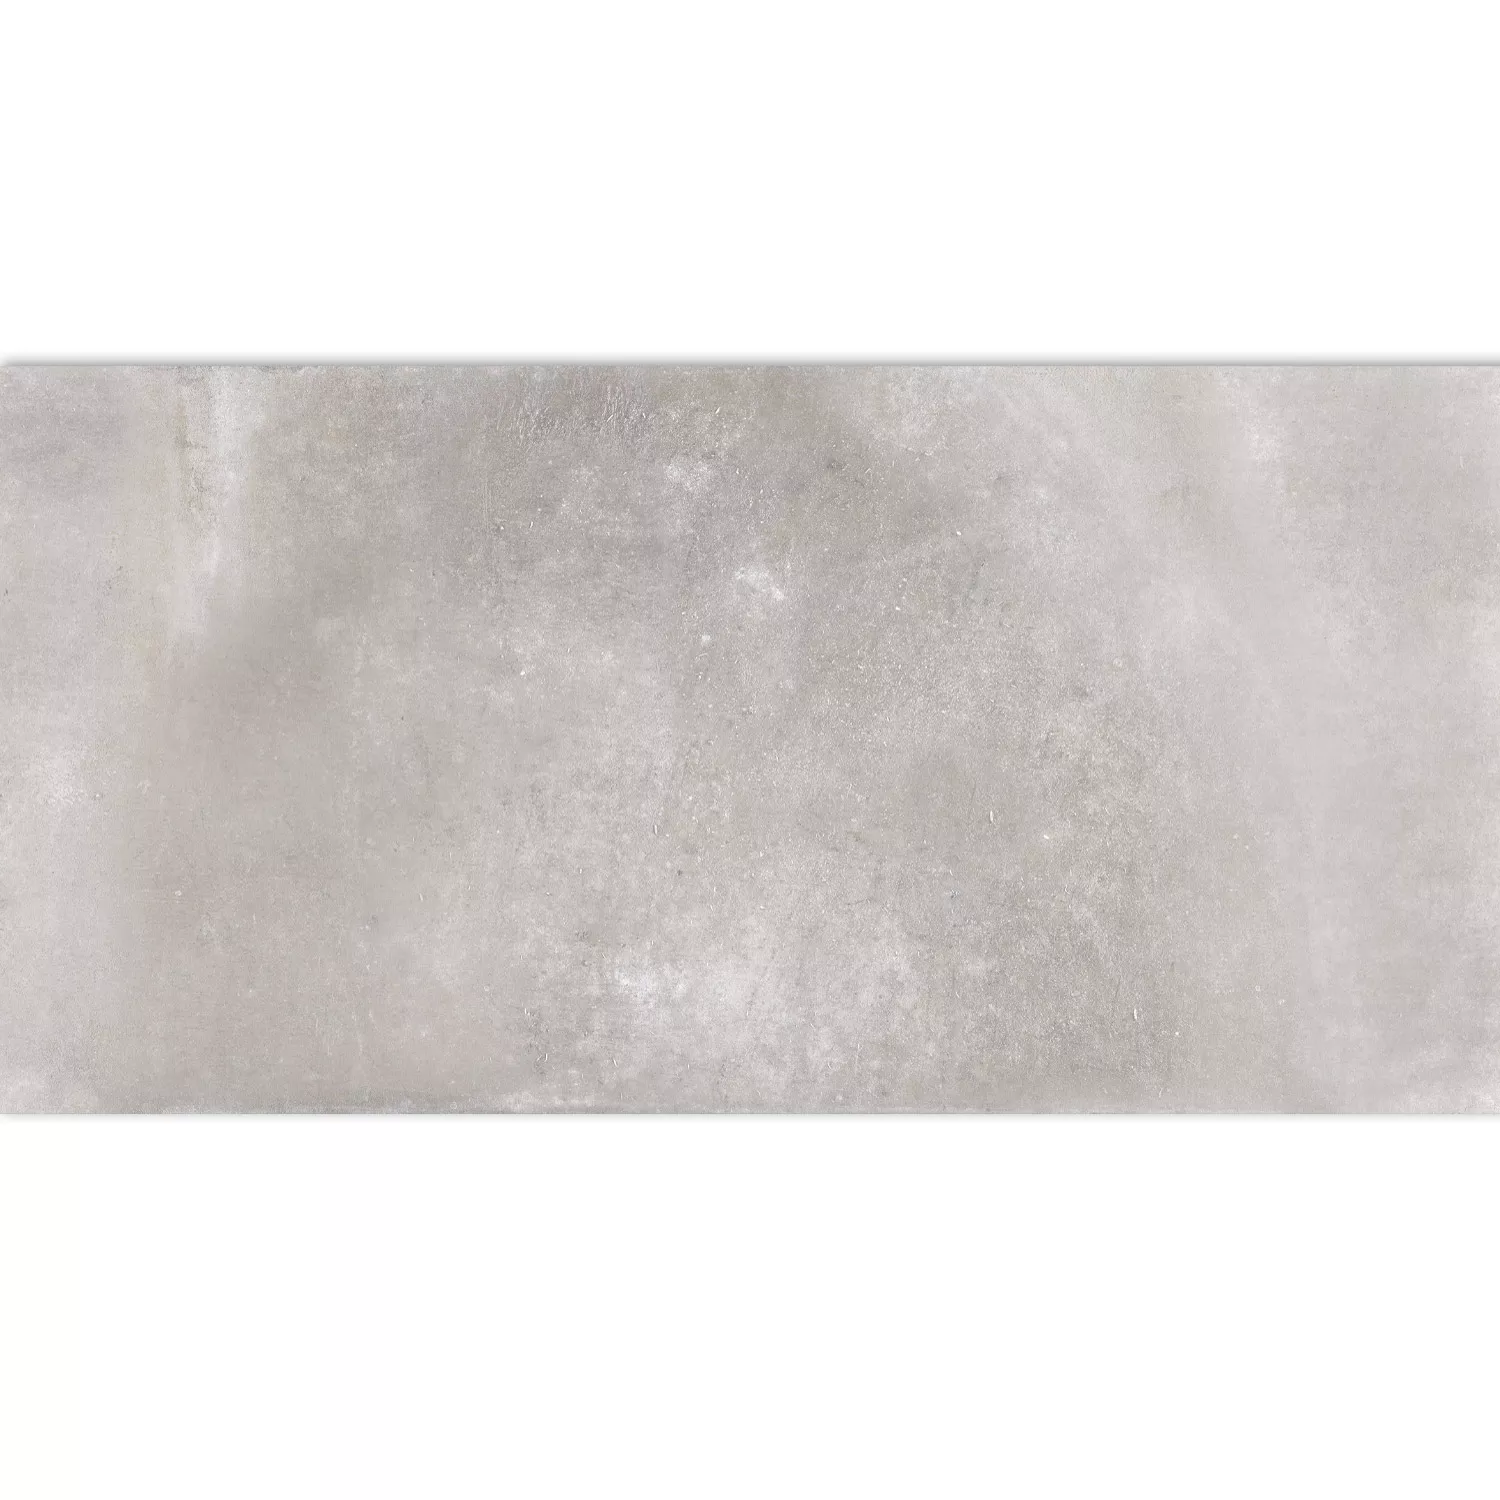 Sample Vloertegels Cement Optic Maryland Grijs 30x60cm